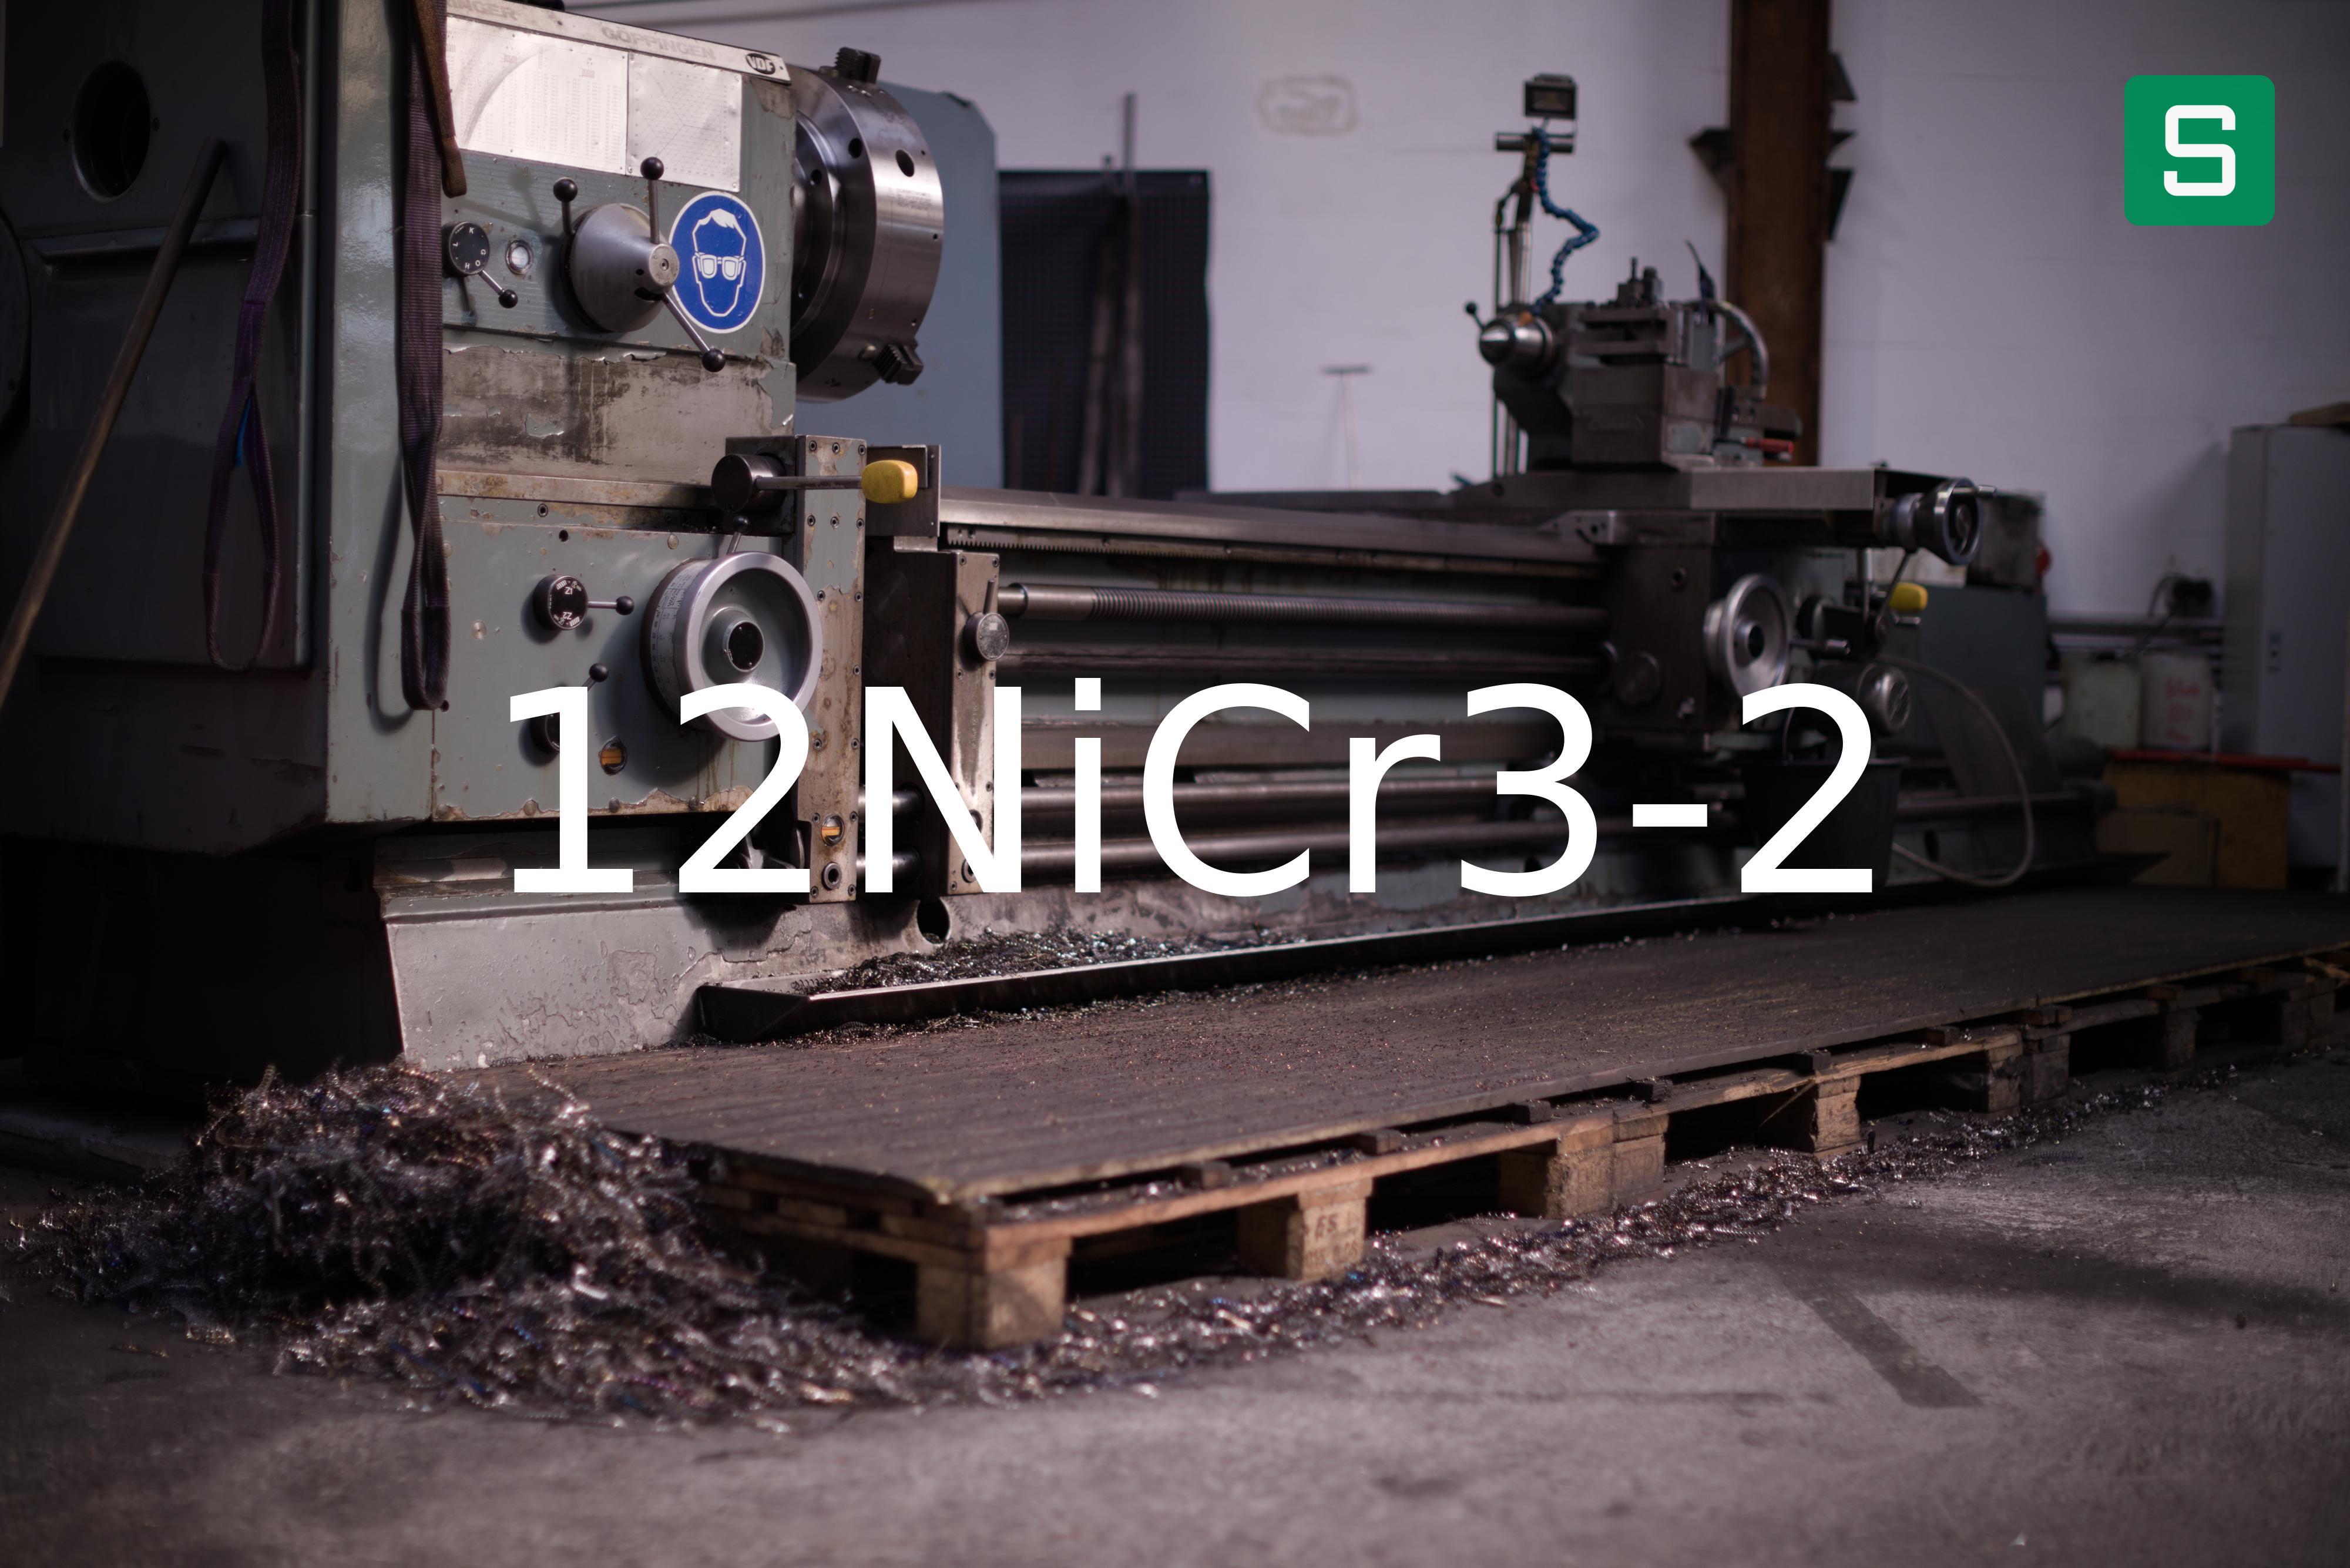 Steel Material: 12NiCr3-2